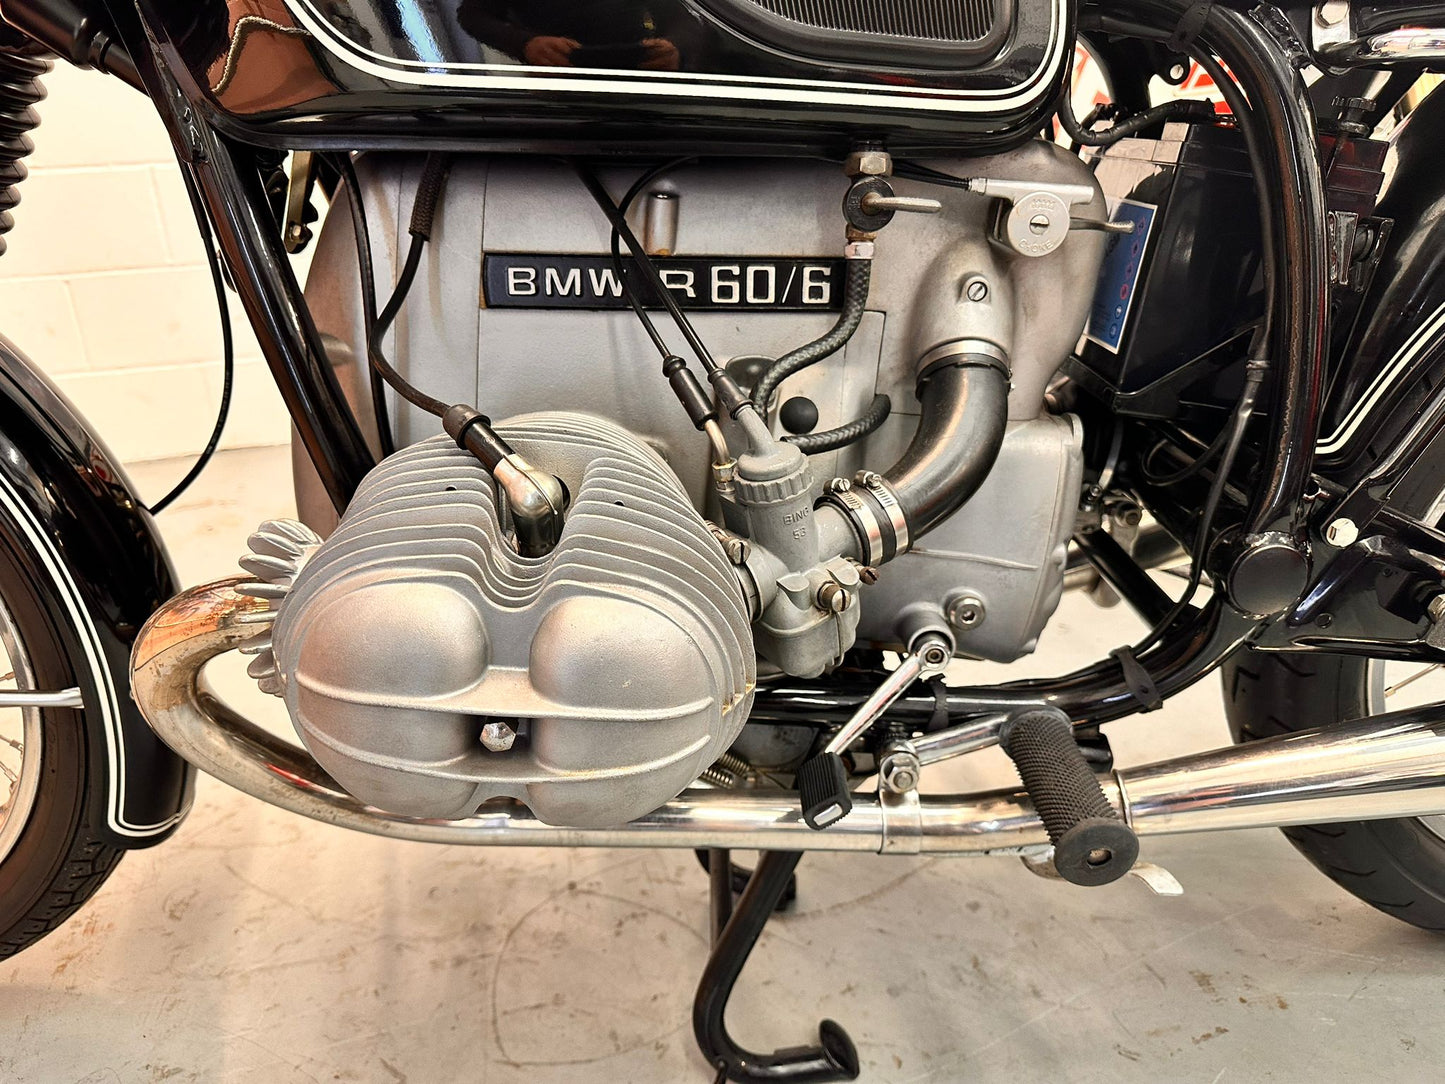 R60/6 (599cc) 1976